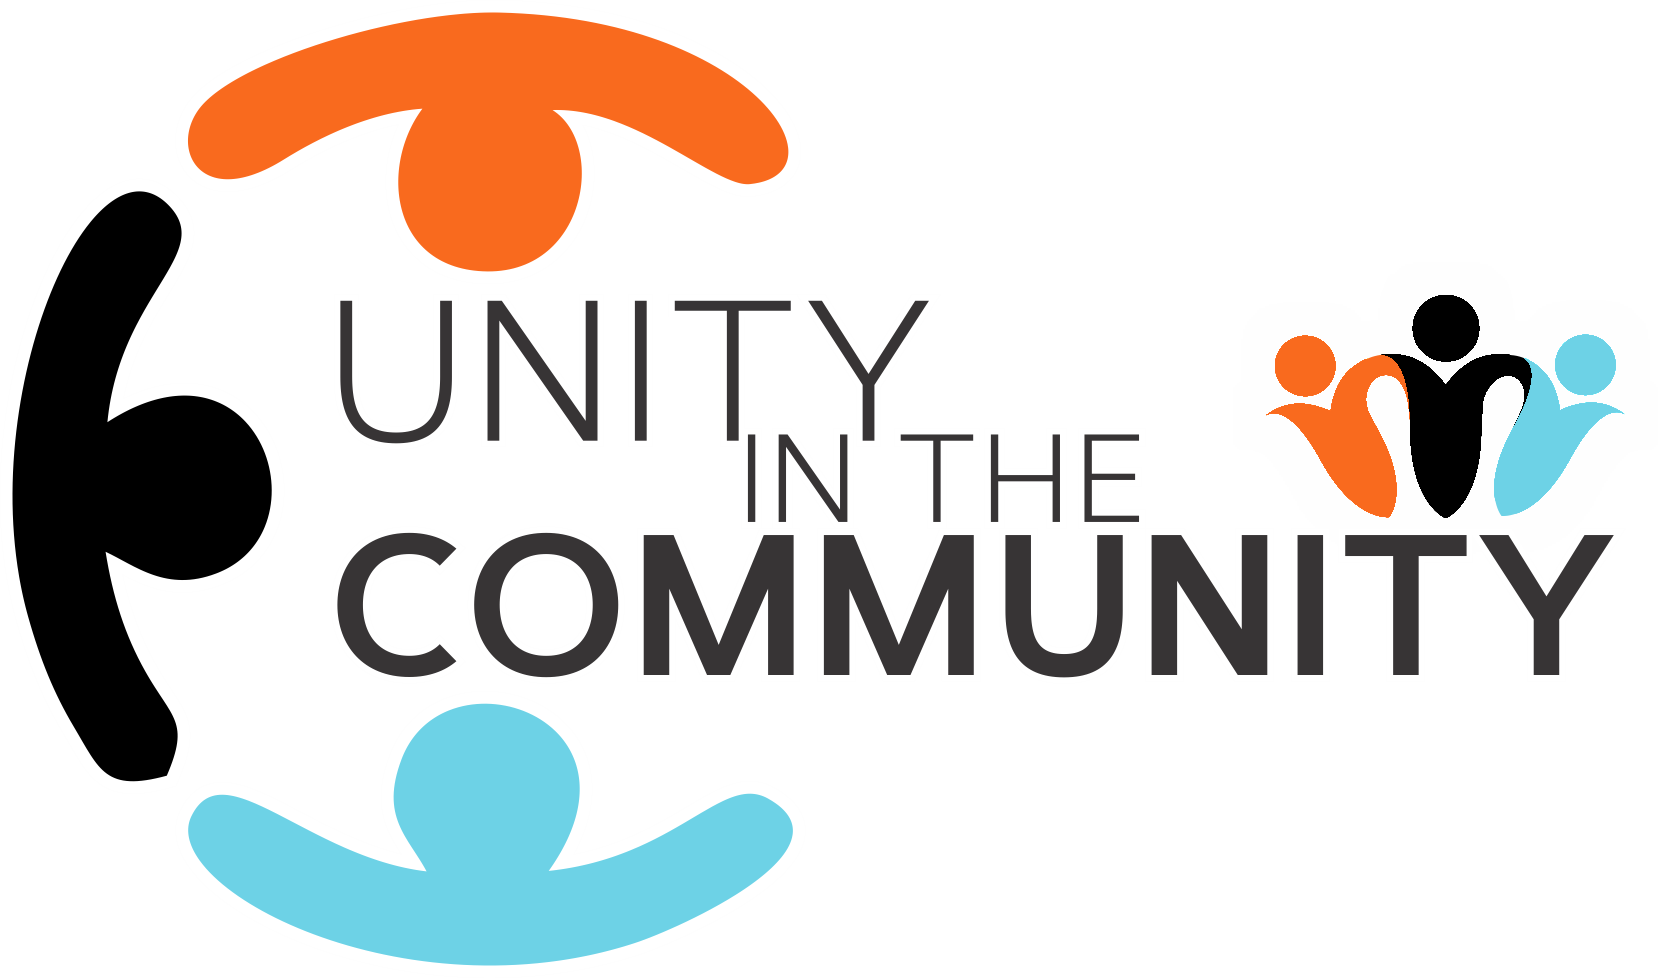 Main community. Community лого. Логотип для комьюнити сообщества. Единство логотип. Логотип main community.